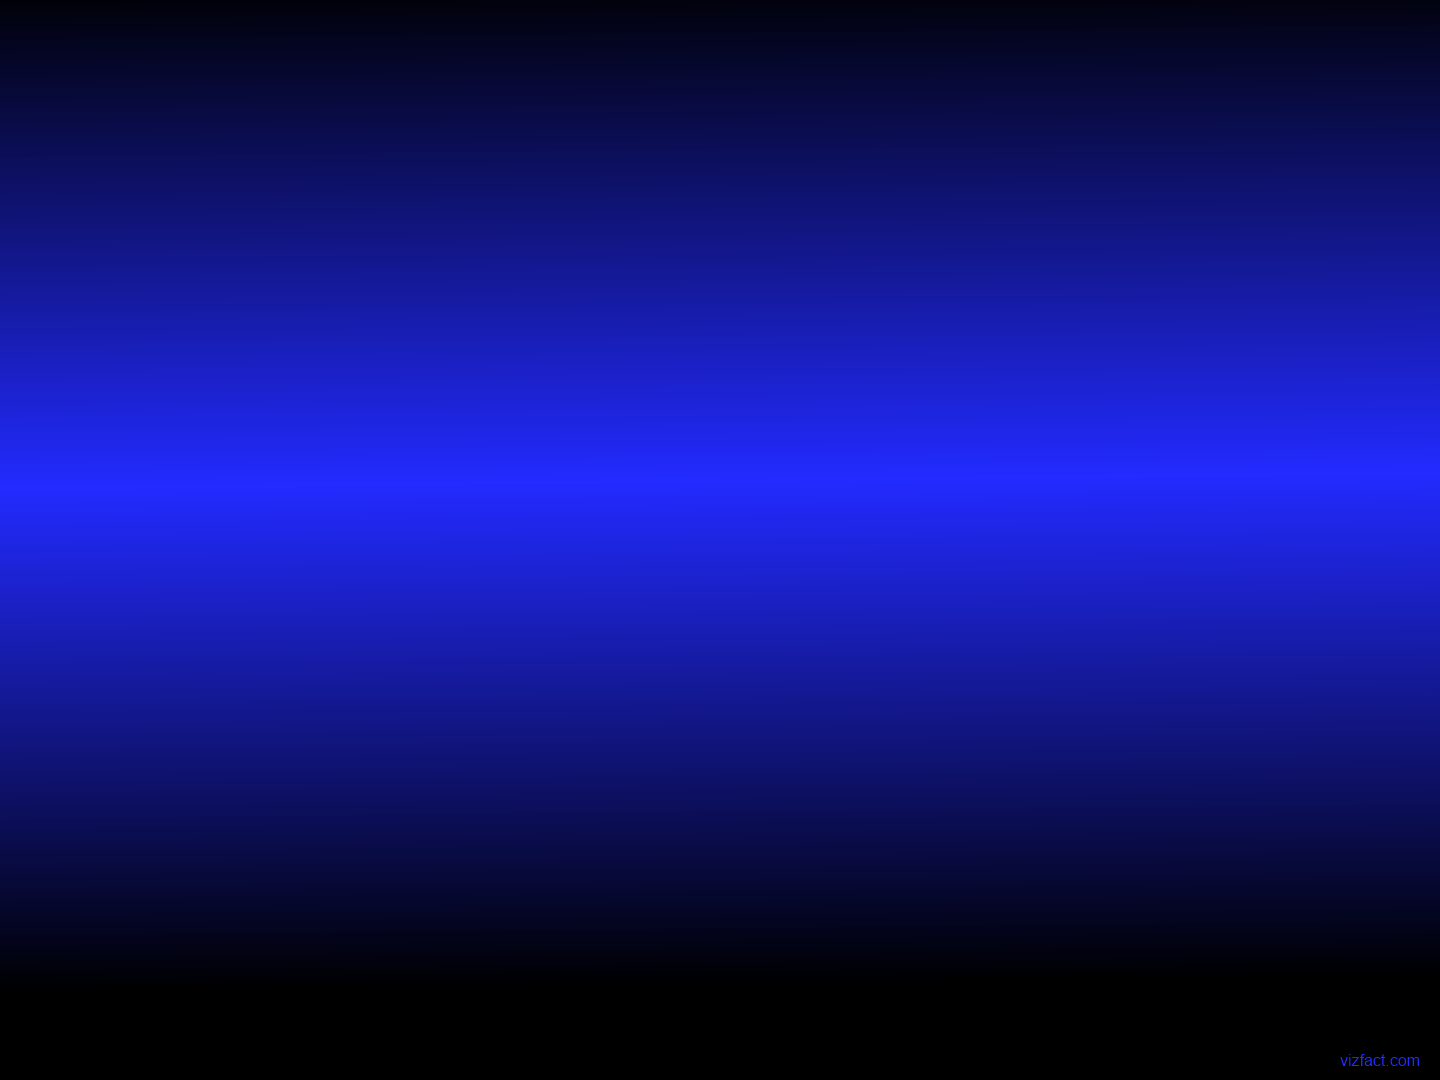 Nothing found for Blue black gradient desktop background